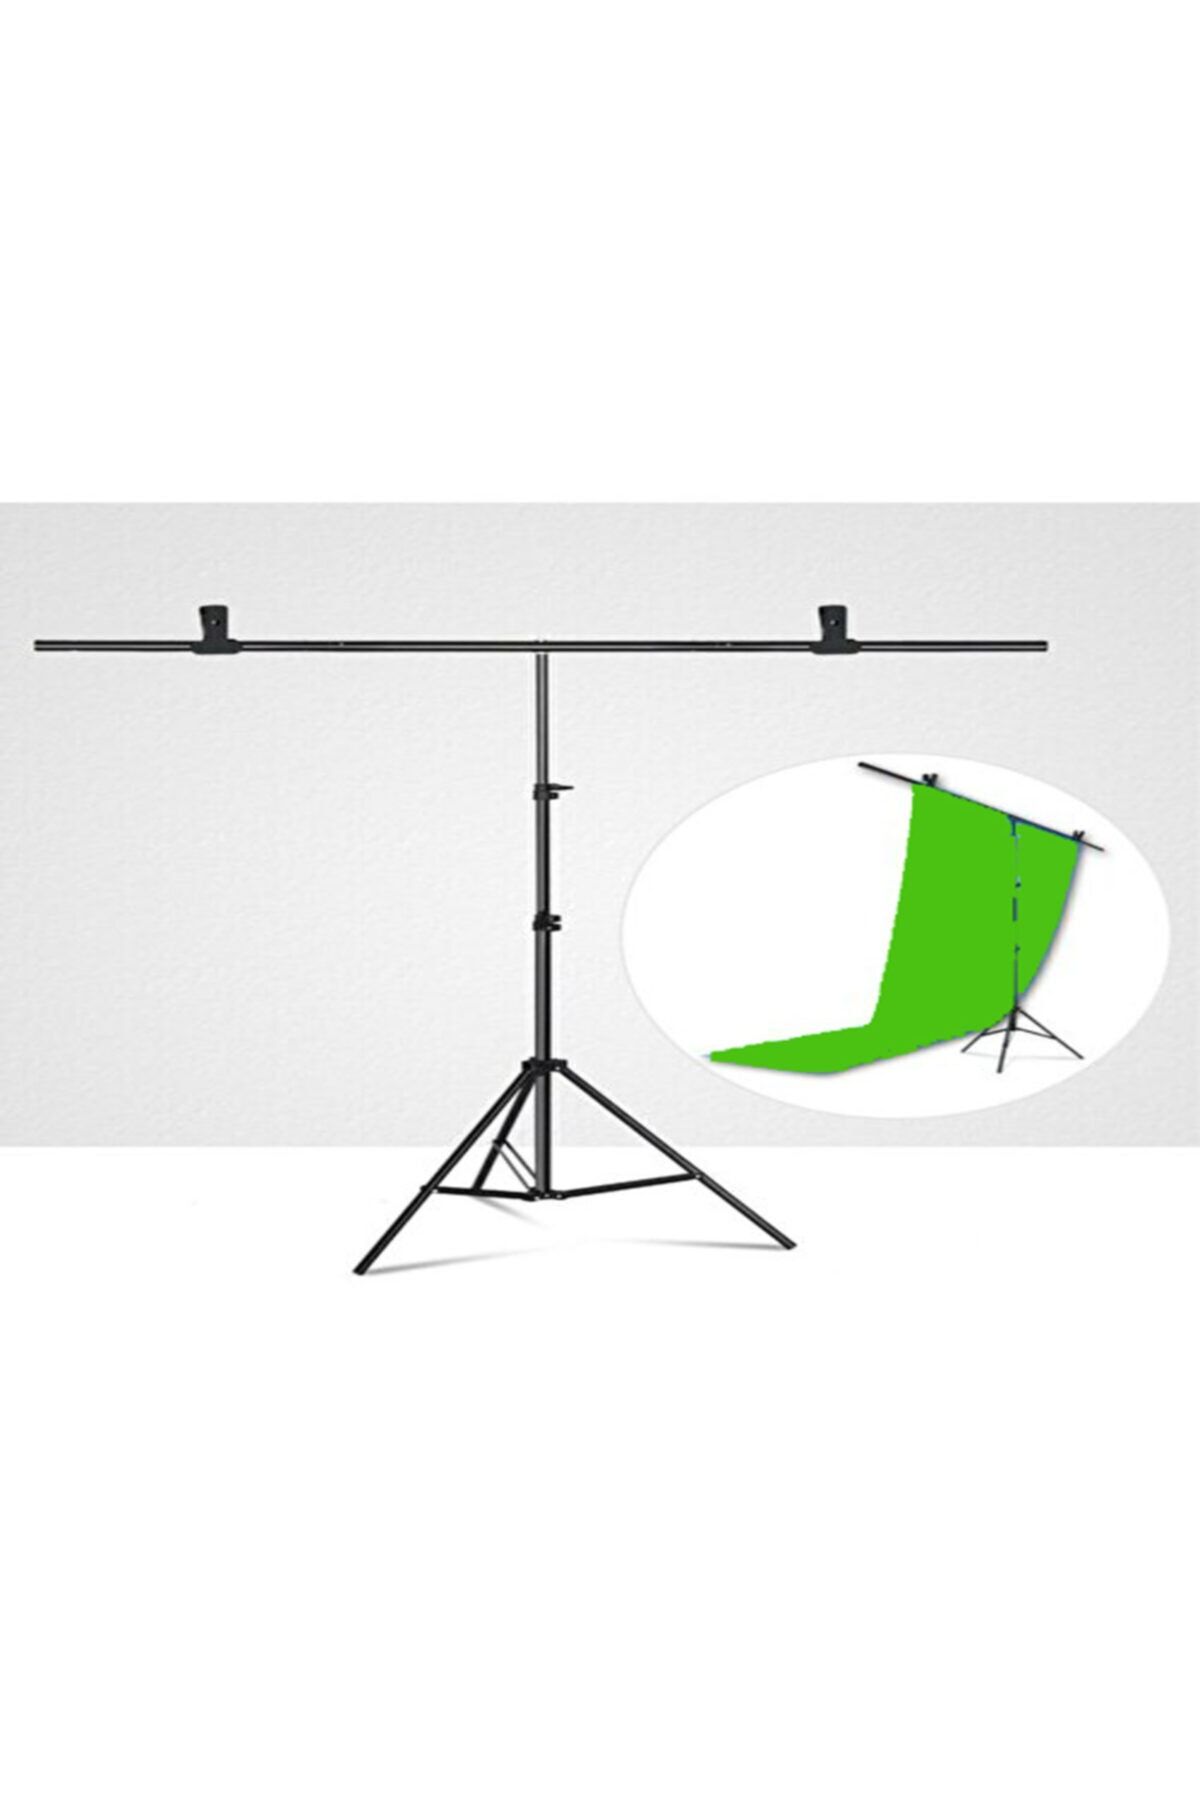 Deyatech 100x200 Pvc Green Screen Silinebilir Yeşil Fon + T Stand